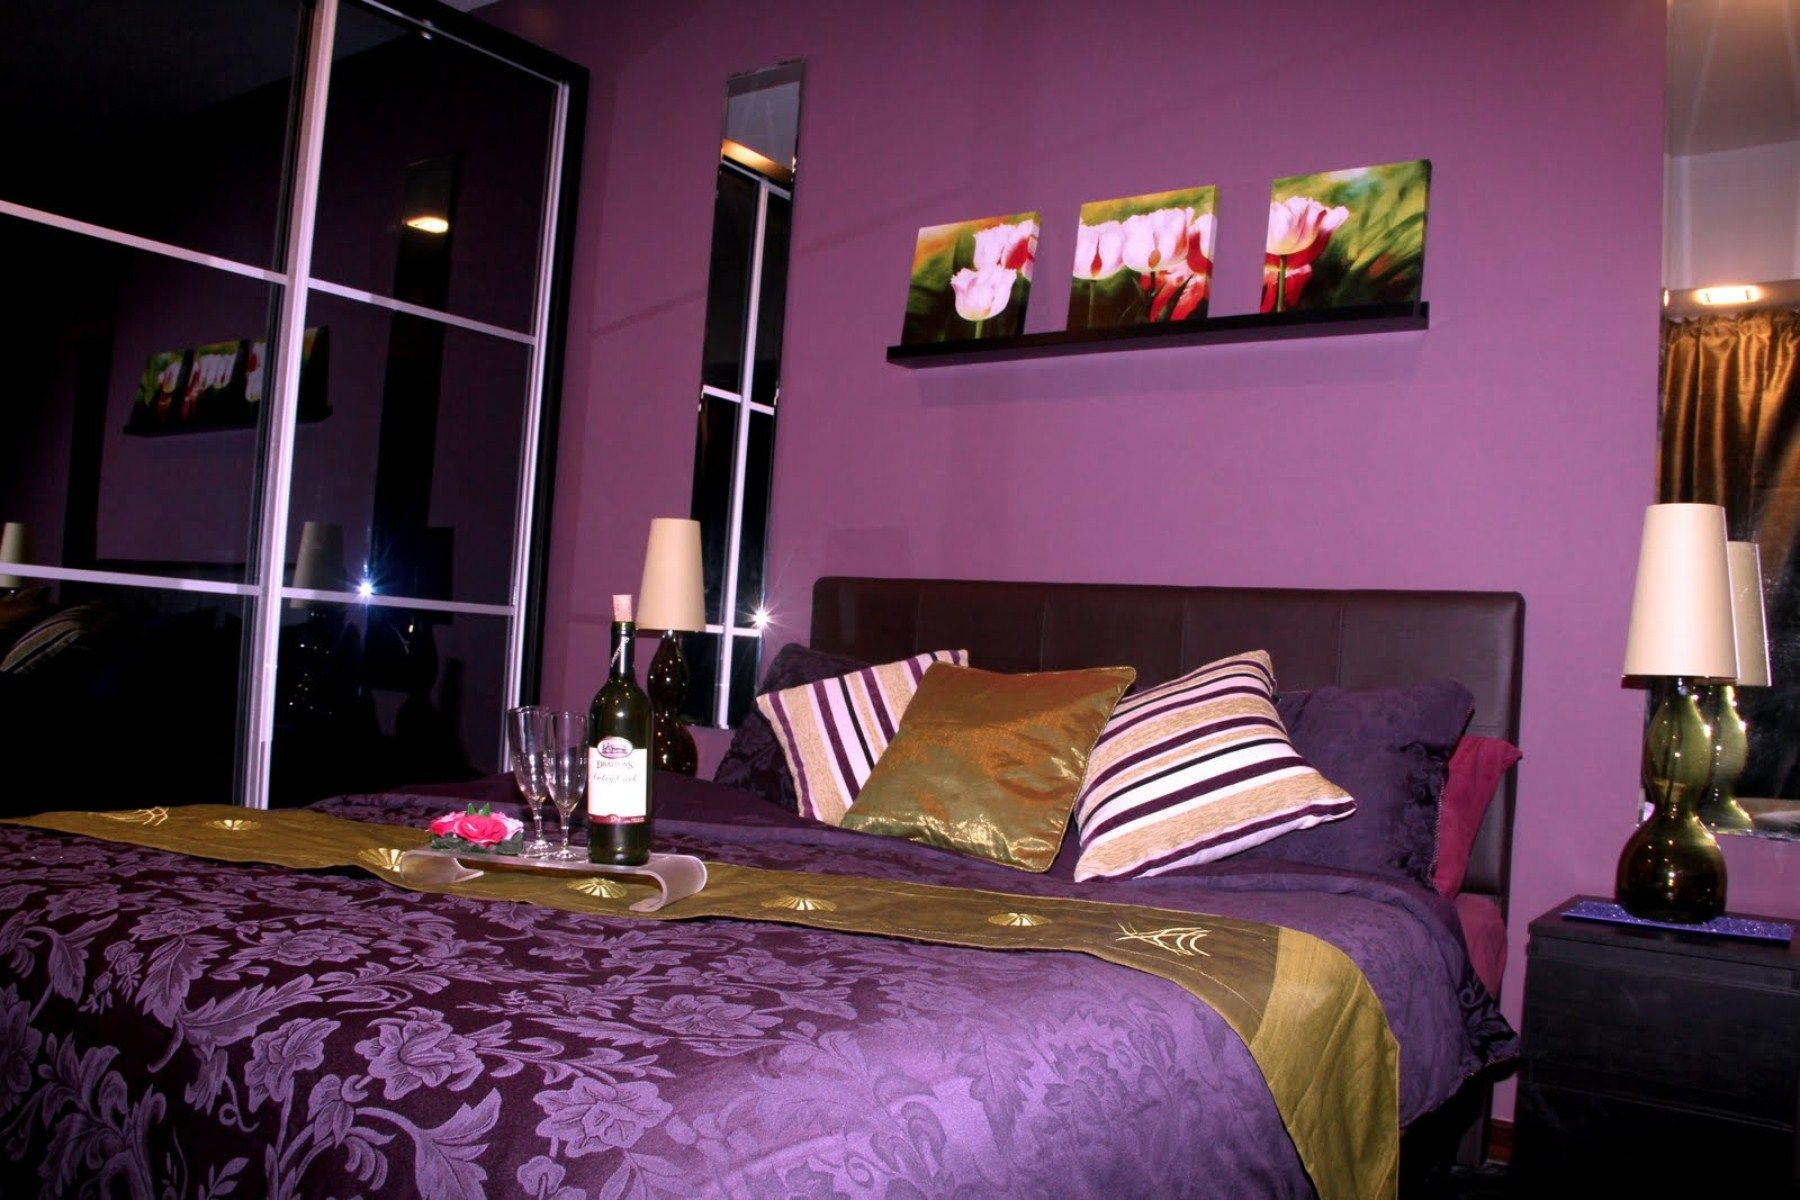 10 Best Black And Purple Bedroom Ideas bedroom romantic purple bedroom ideas for valentine days with black 1 2022